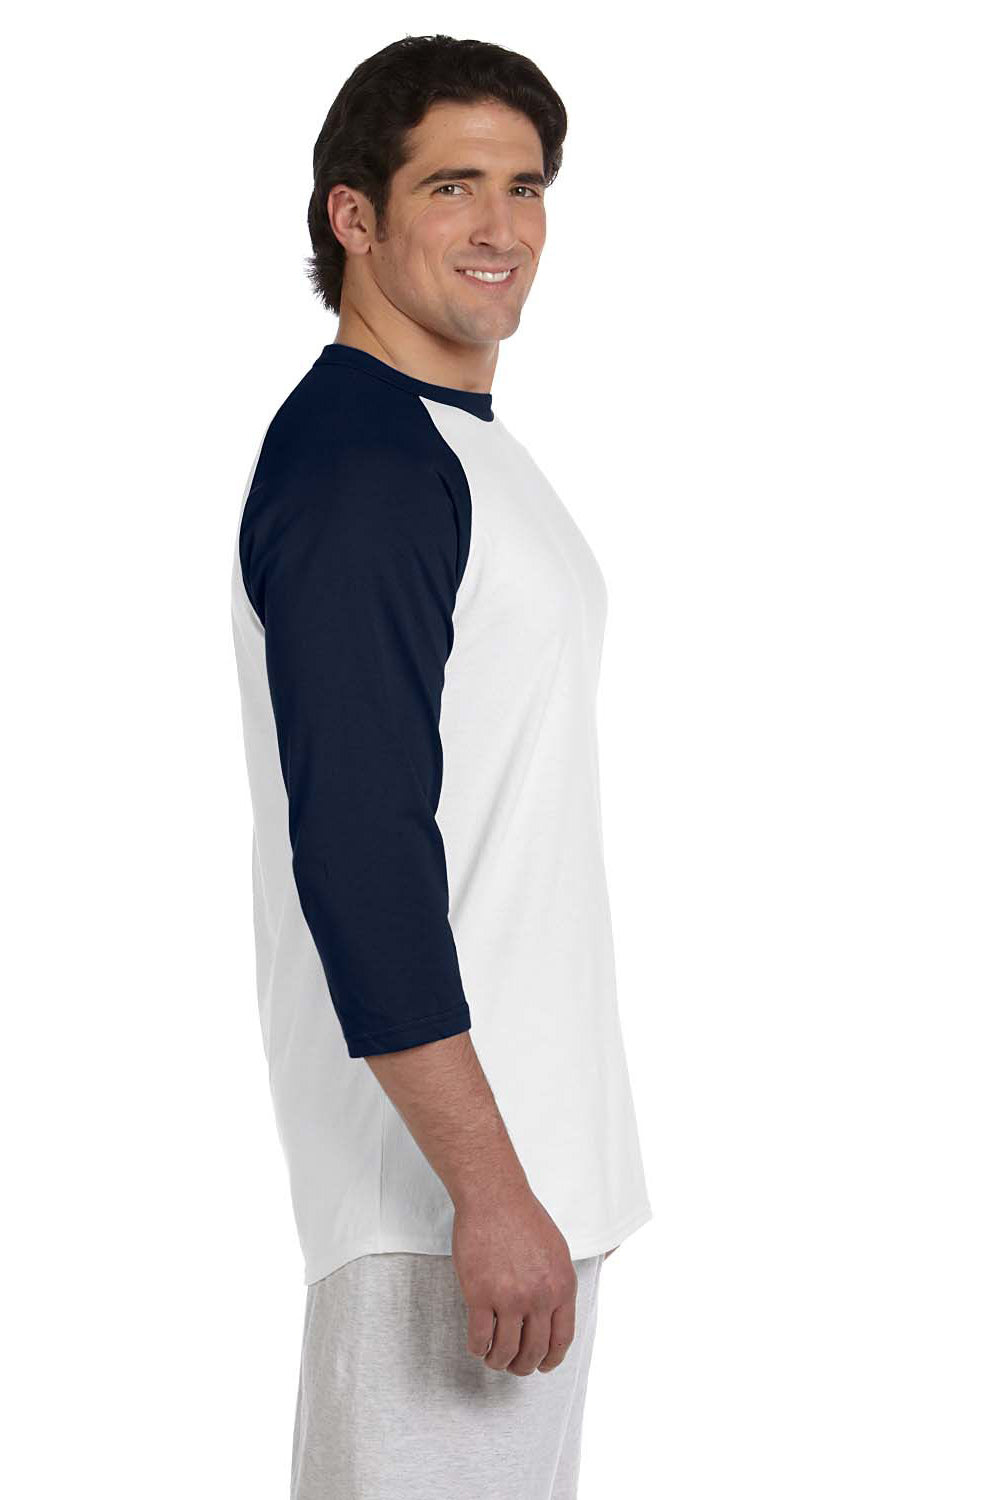 Champion T1397 Mens 3/4 Sleeve Crewneck T-Shirt White/Navy Blue Side